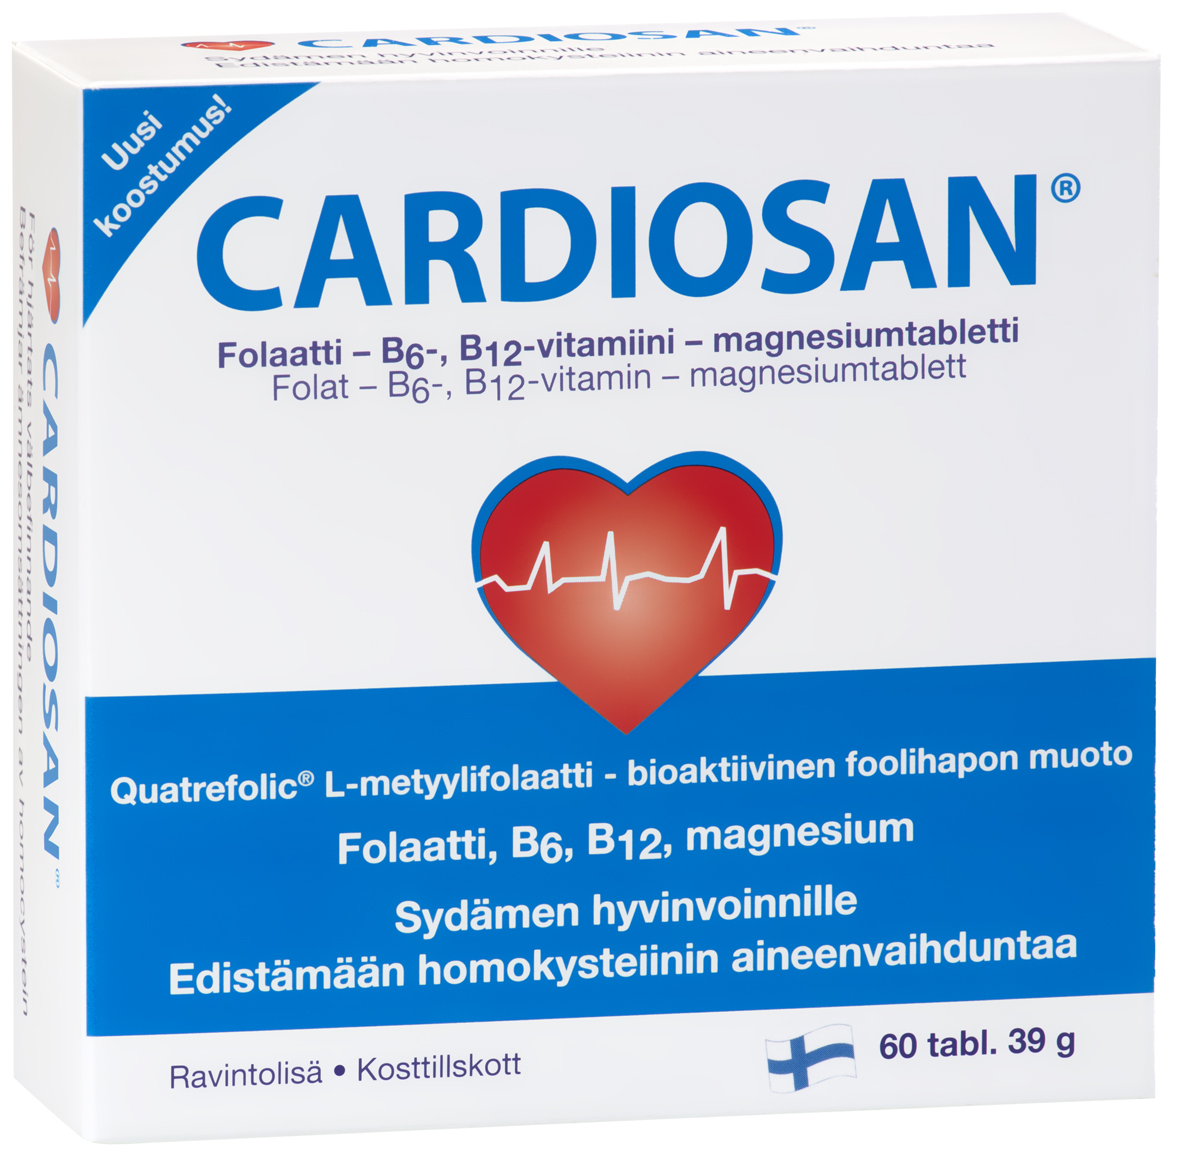 Cardiosan 60 таблеток, 39 г